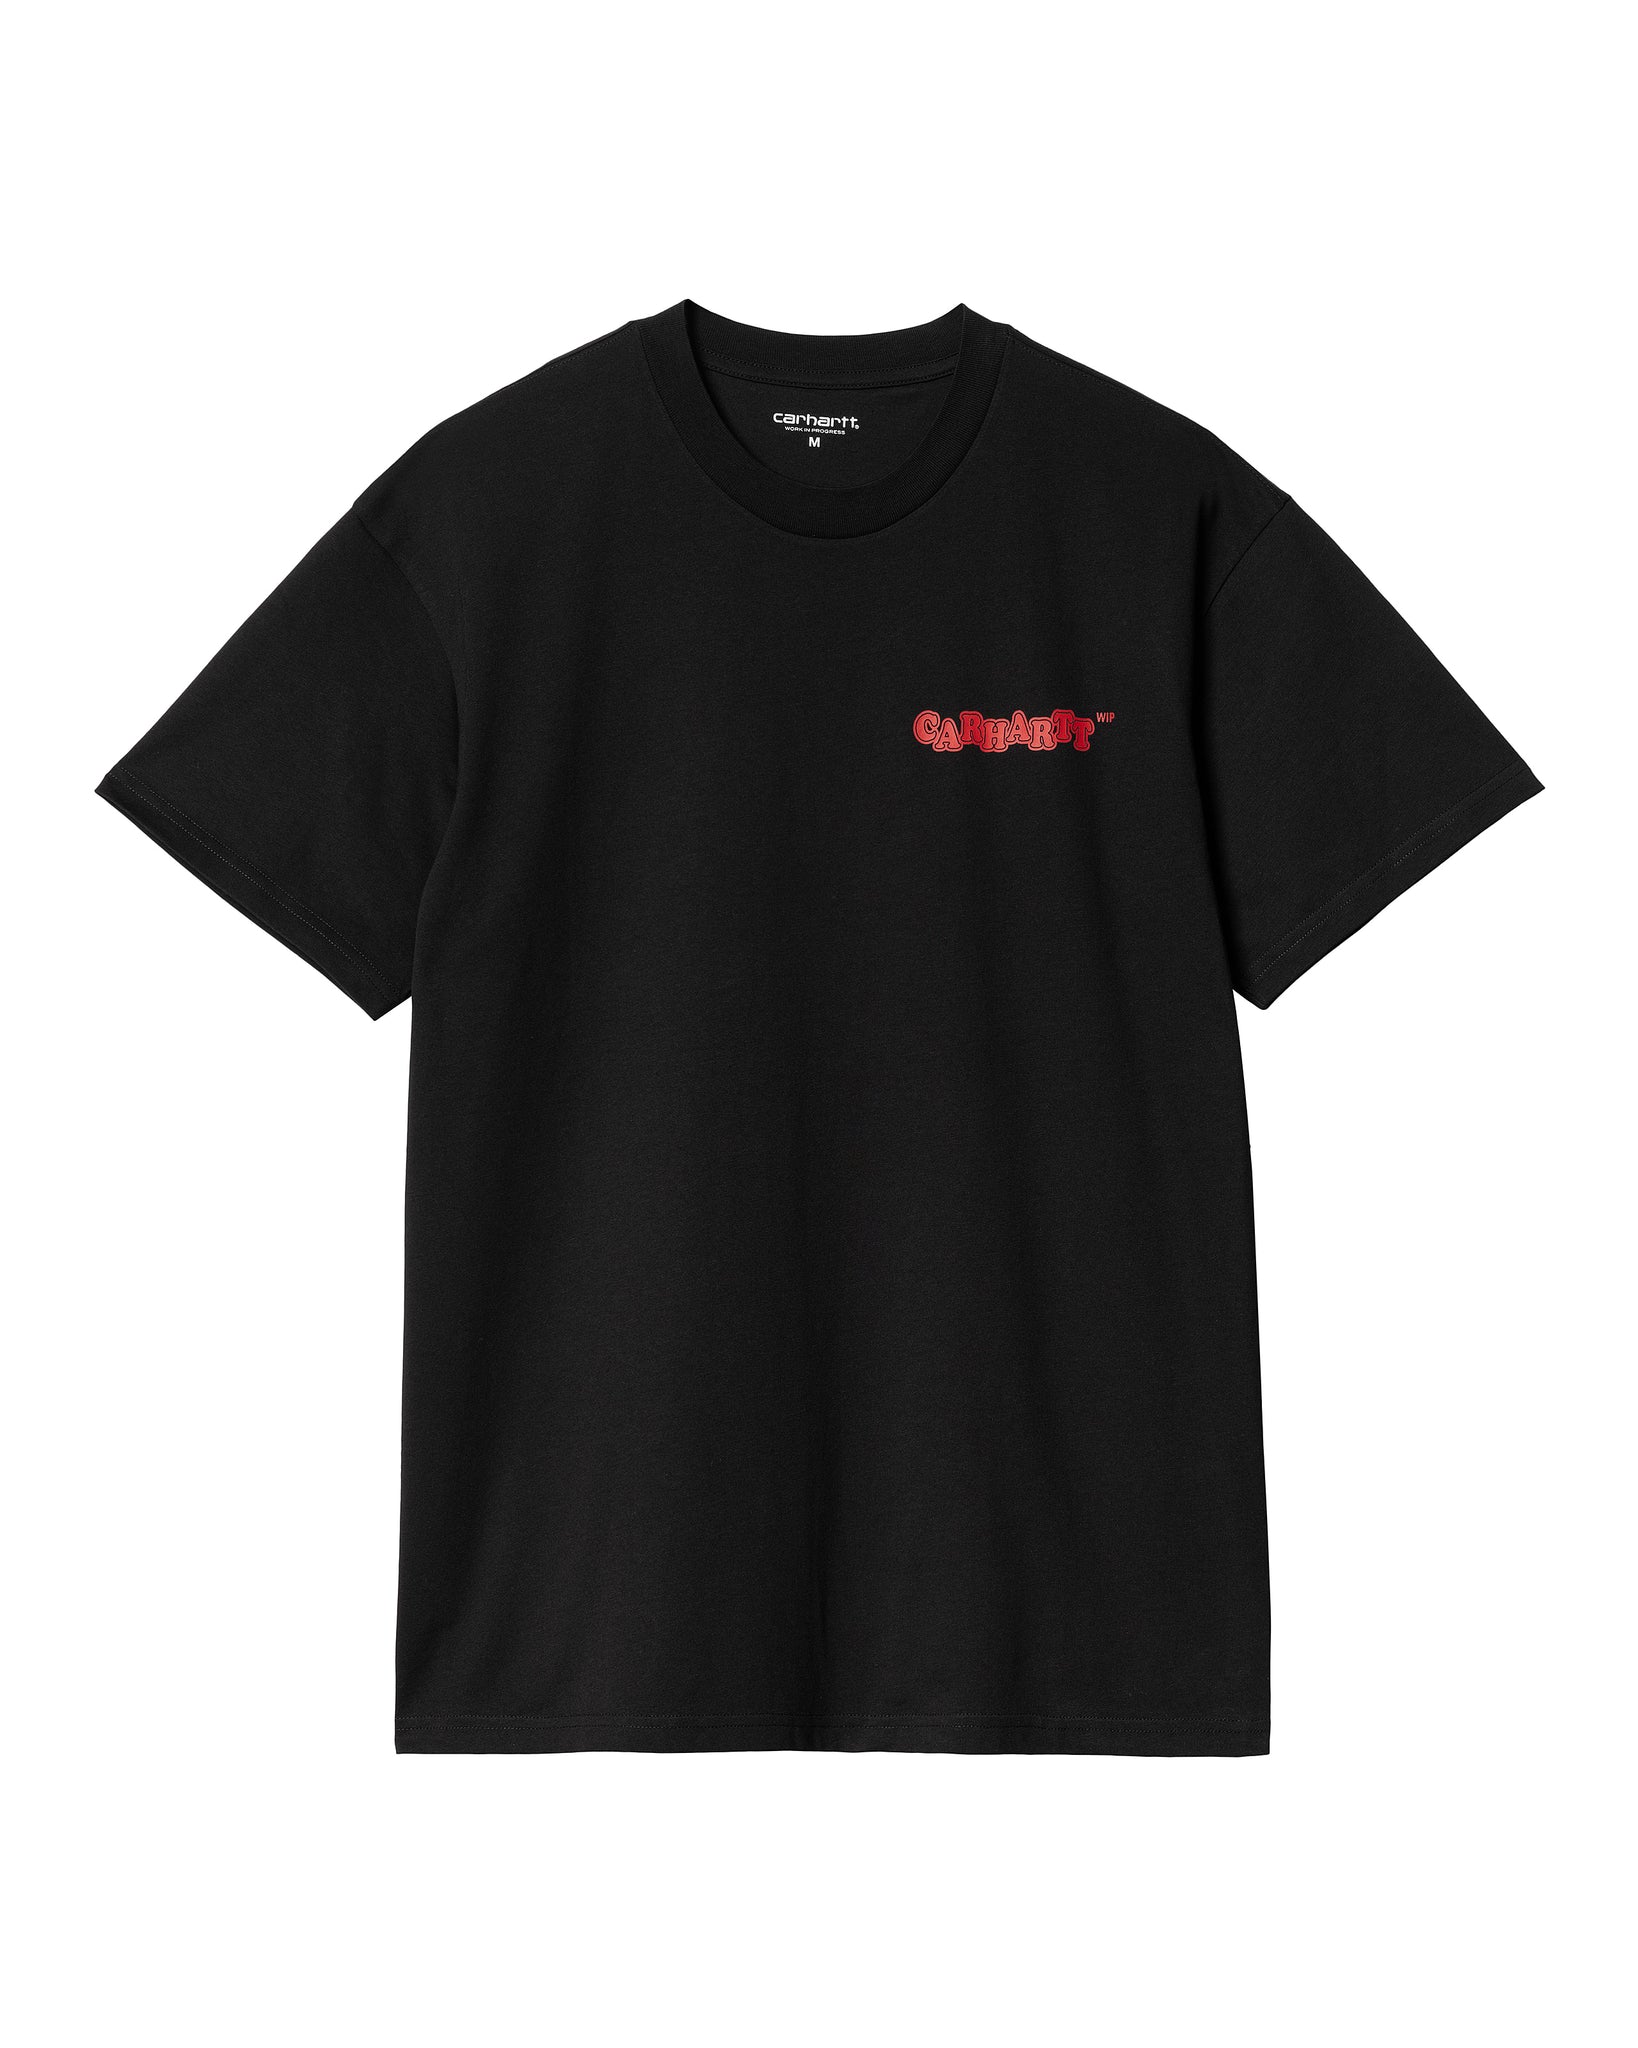 T-shirt Fast Food - Black/Red